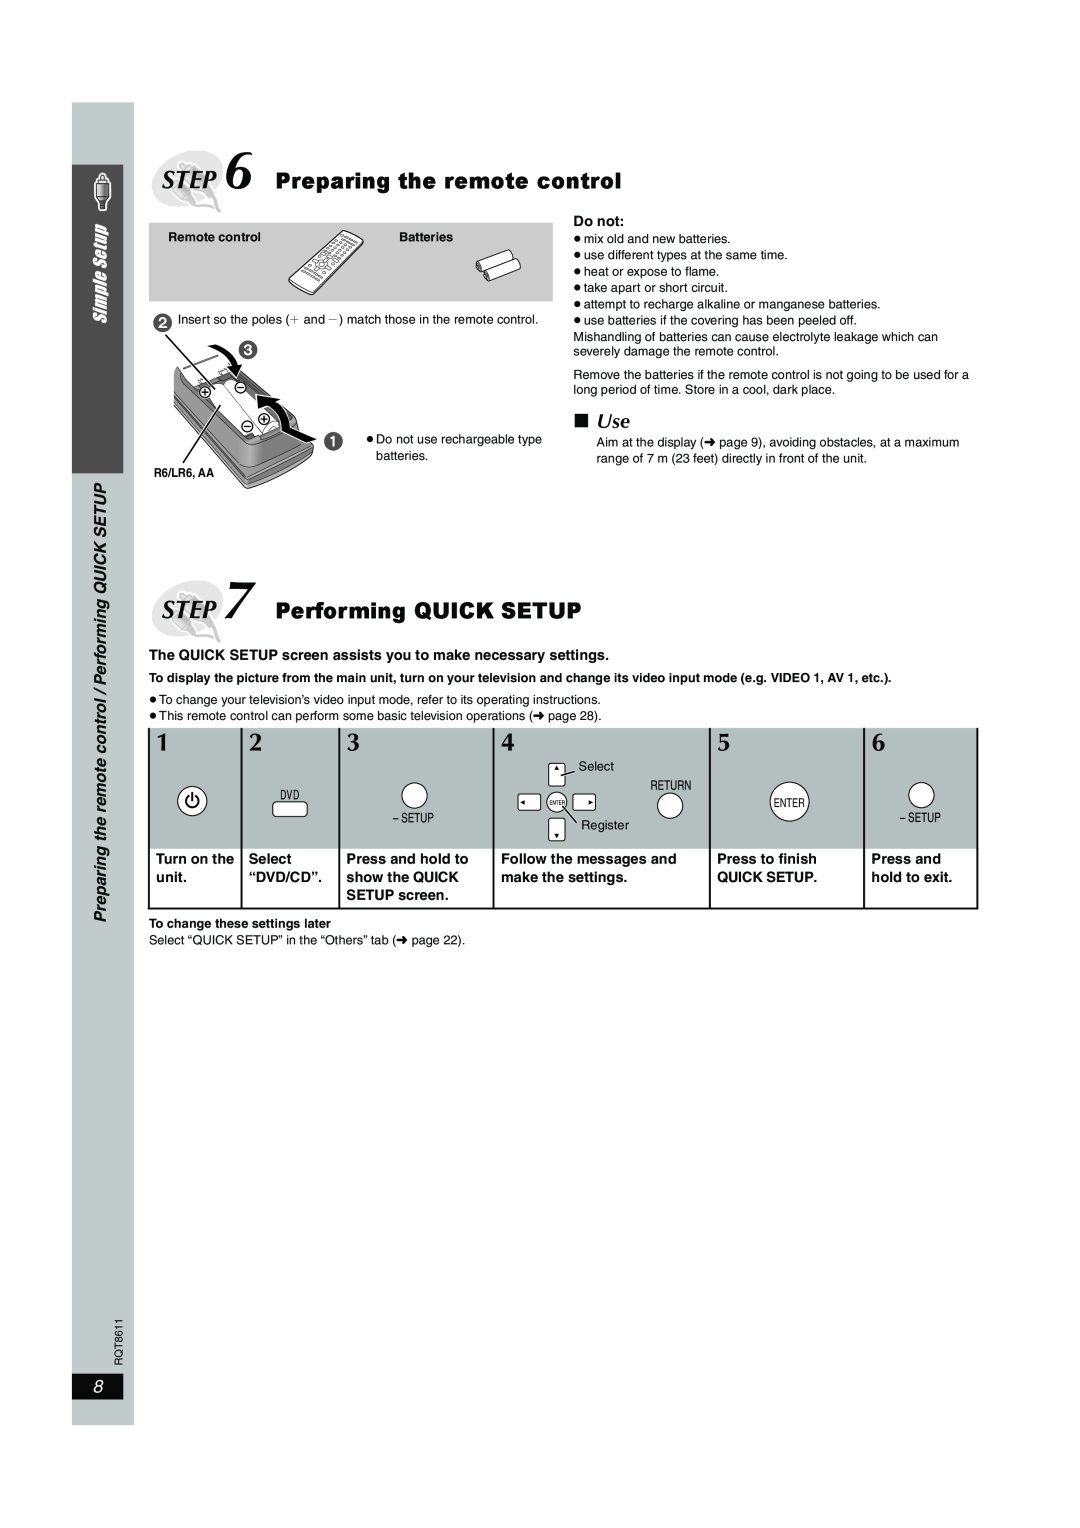 Panasonic SC-HT640W manual Step, Preparing the remote control, Performing QUICK SETUP, Use, Simple Setup 